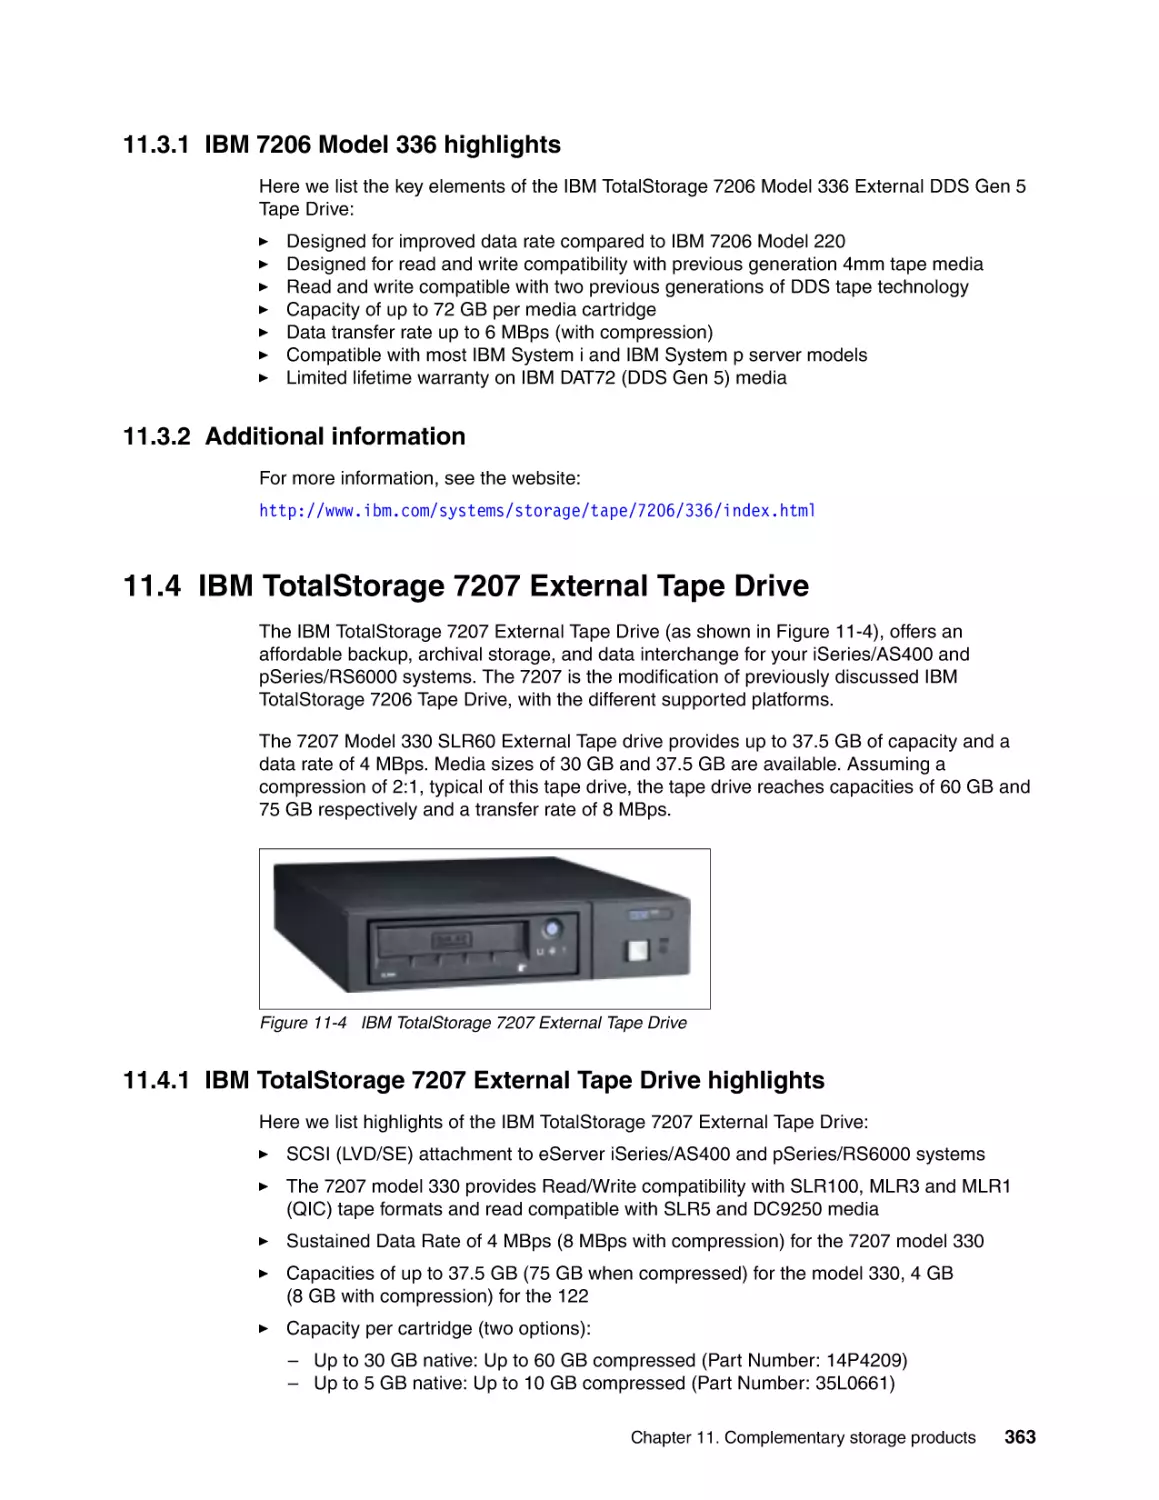 11.3.1 IBM 7206 Model 336 highlights
11.3.2 Additional information
11.4 IBM TotalStorage 7207 External Tape Drive
11.4.1 IBM TotalStorage 7207 External Tape Drive highlights